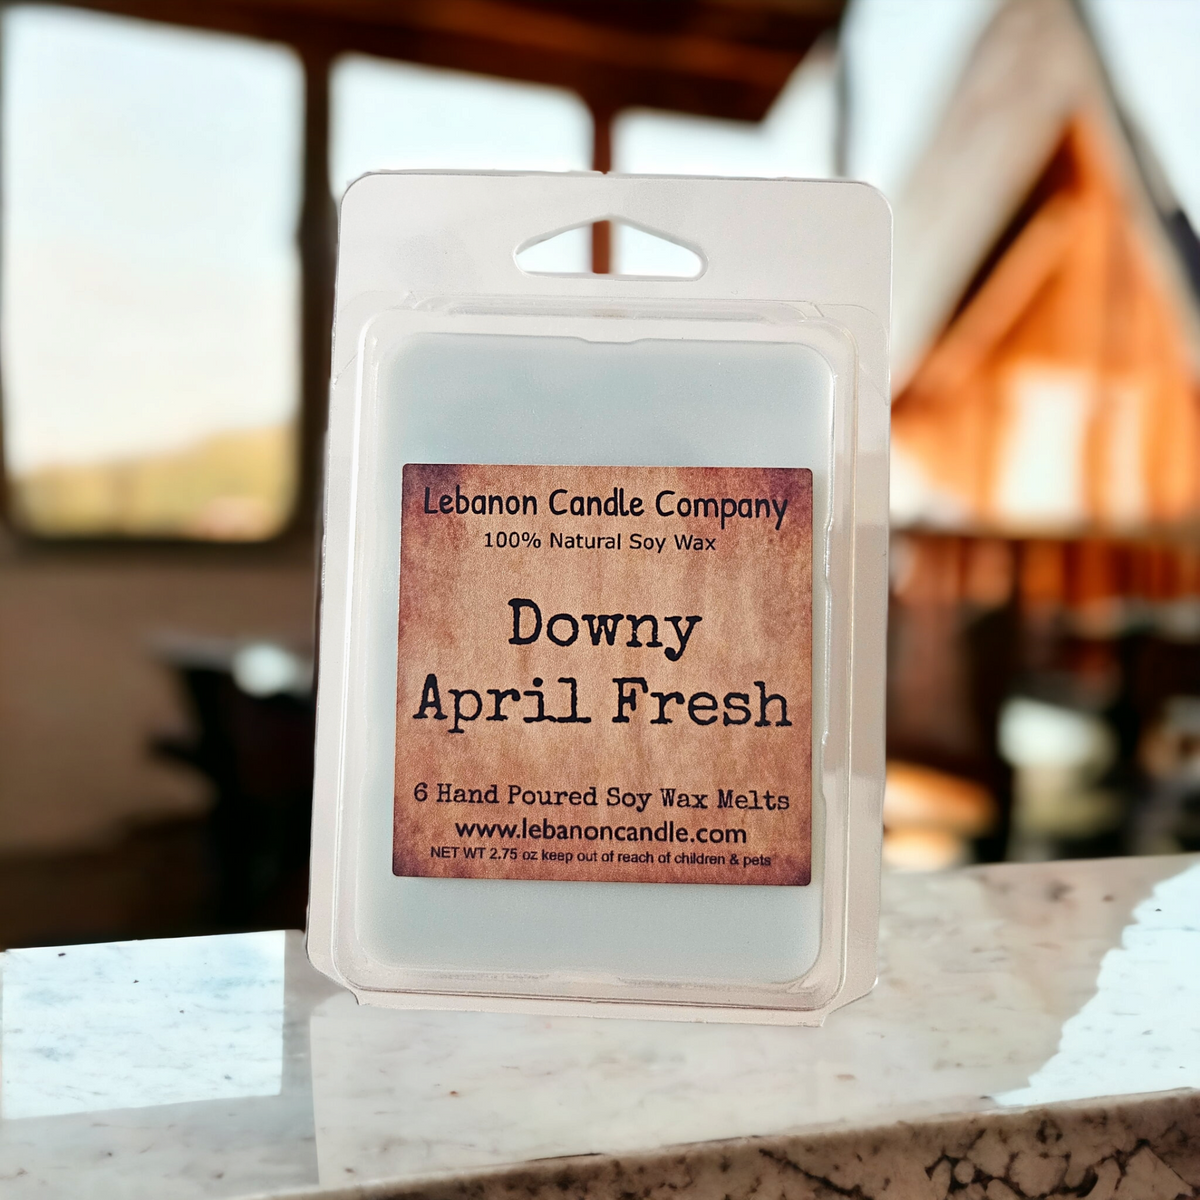 Downy April Fresh – Lebanon Candle Company